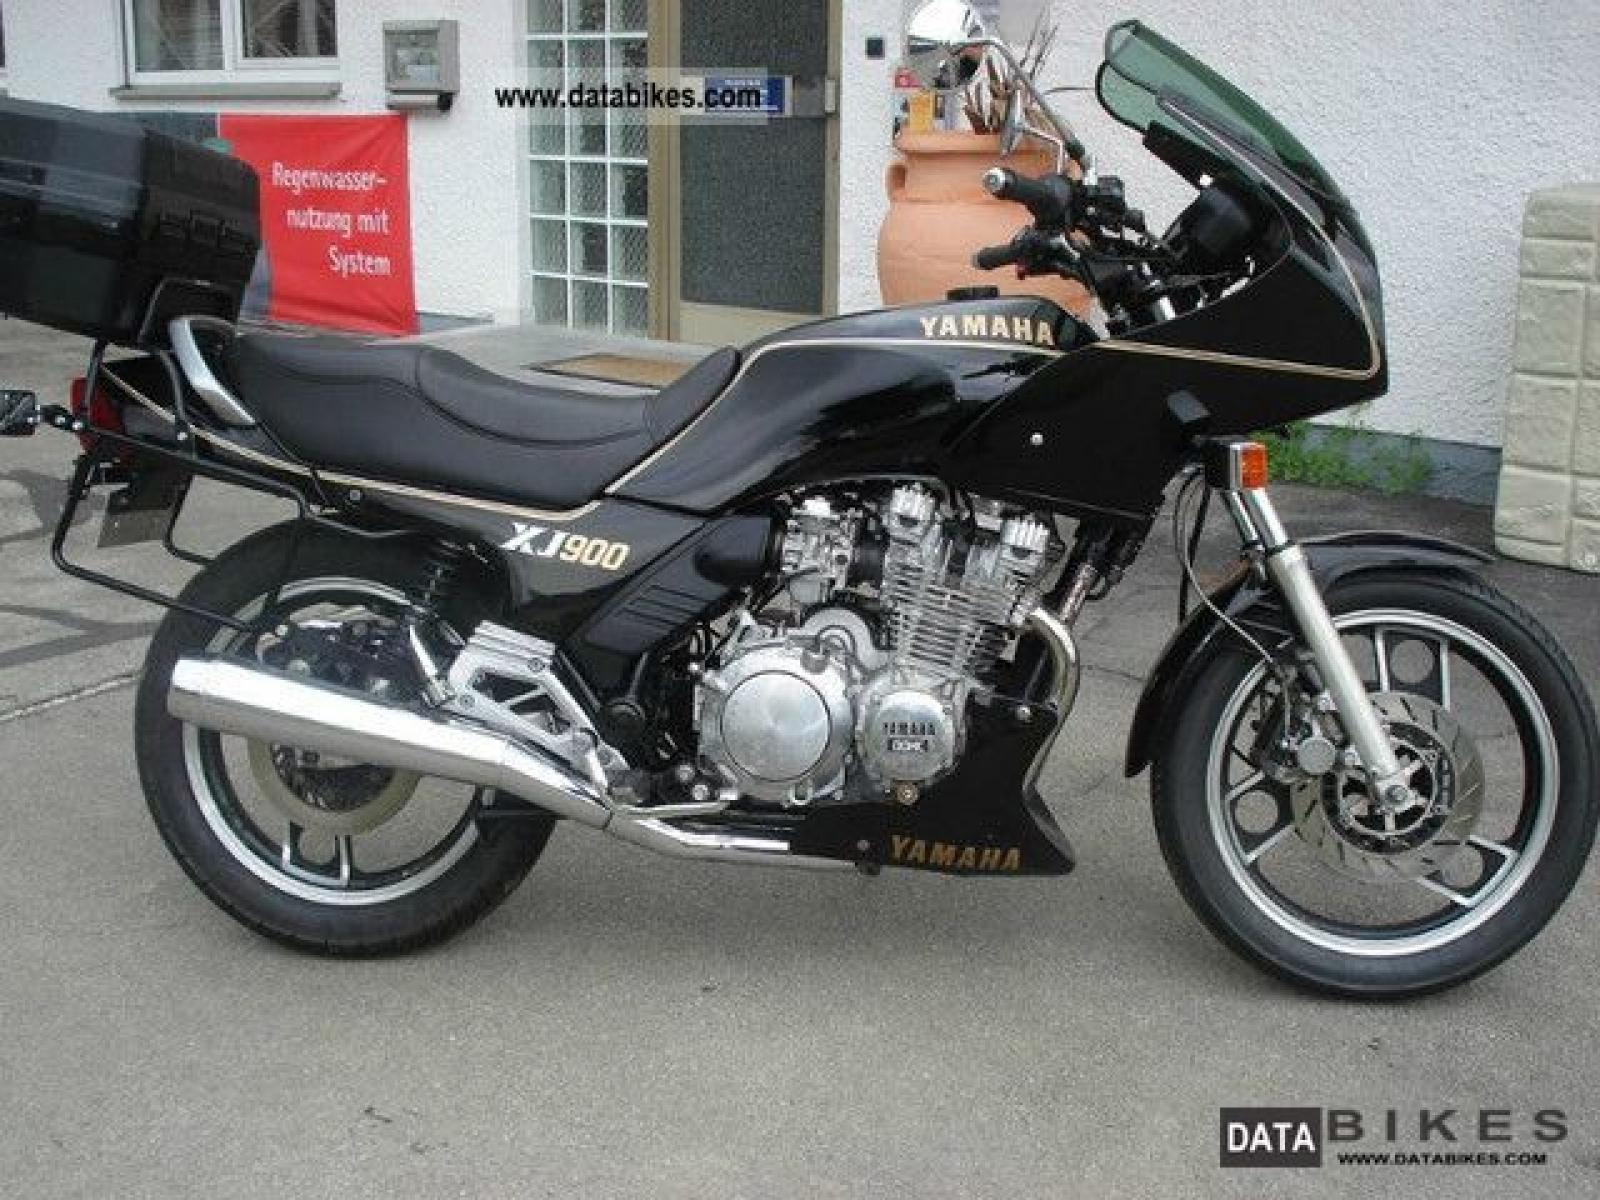 Agujas Yamaha XJ 900 f año 1983-1991